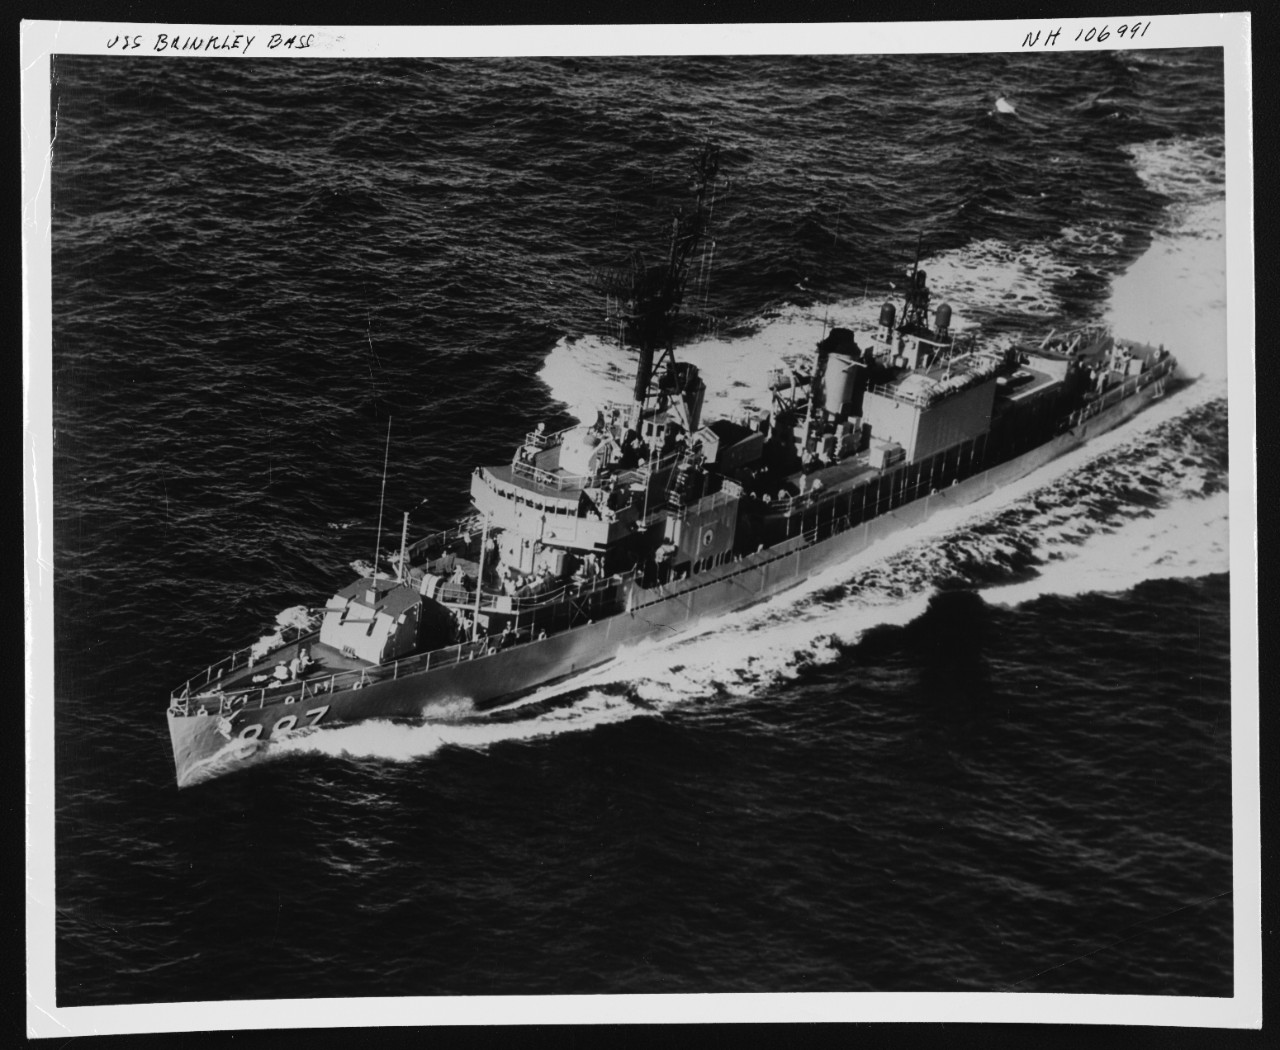 Photo # NH 106991  USS Brinkley Bass